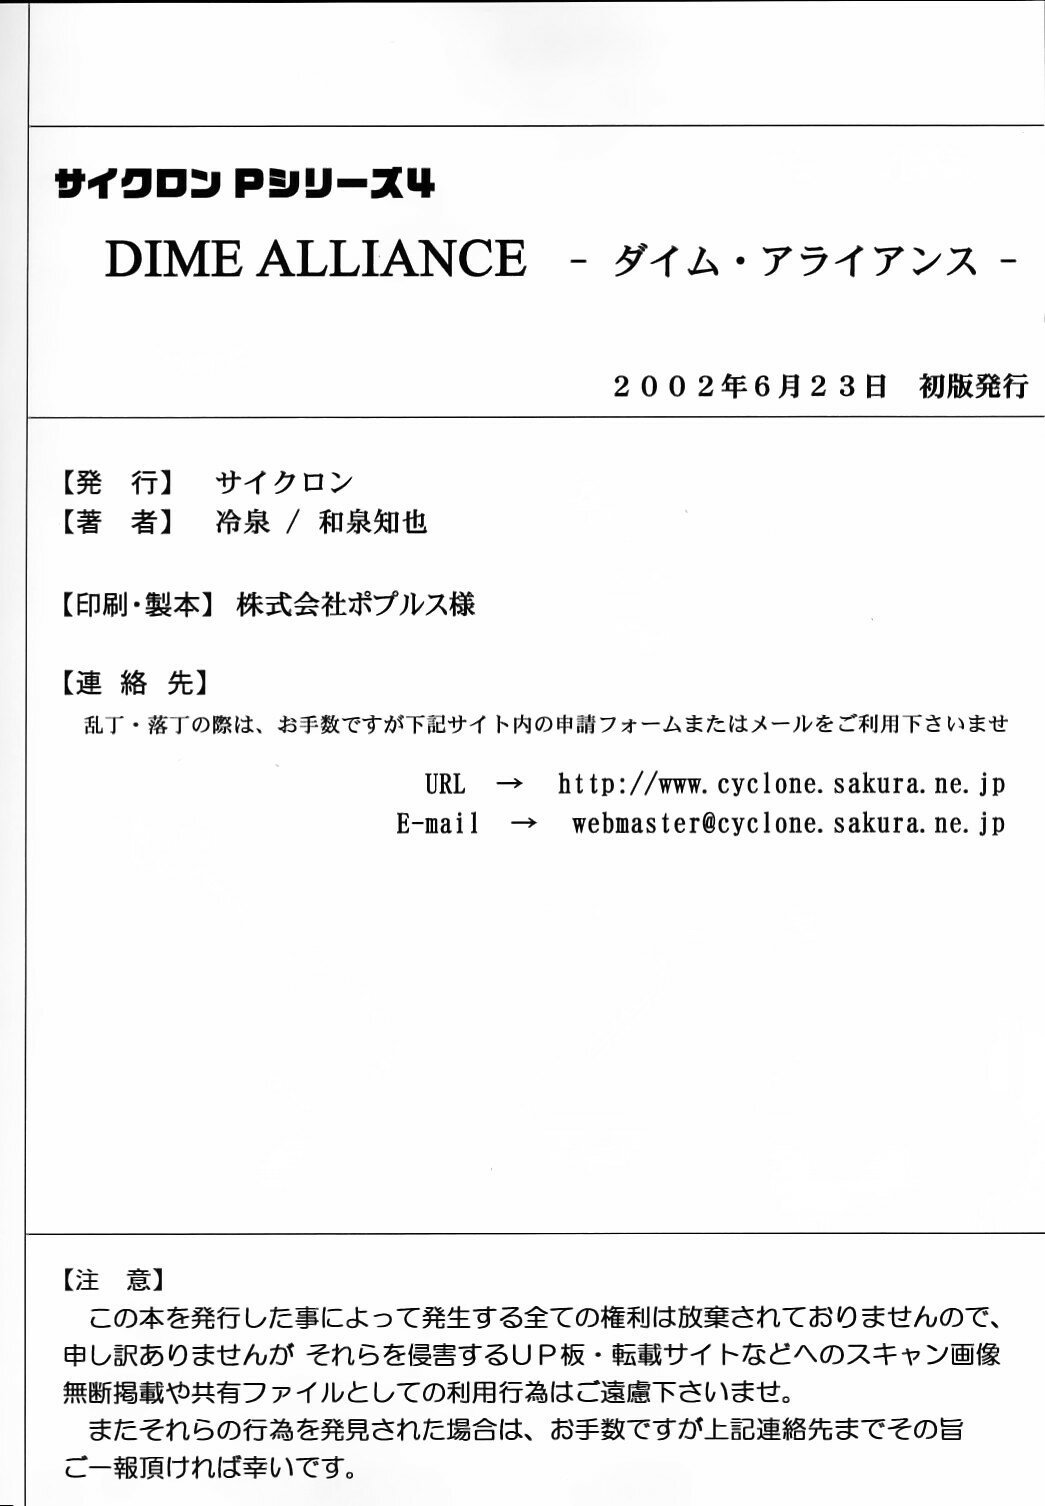 Dime Alliance 1 - 61